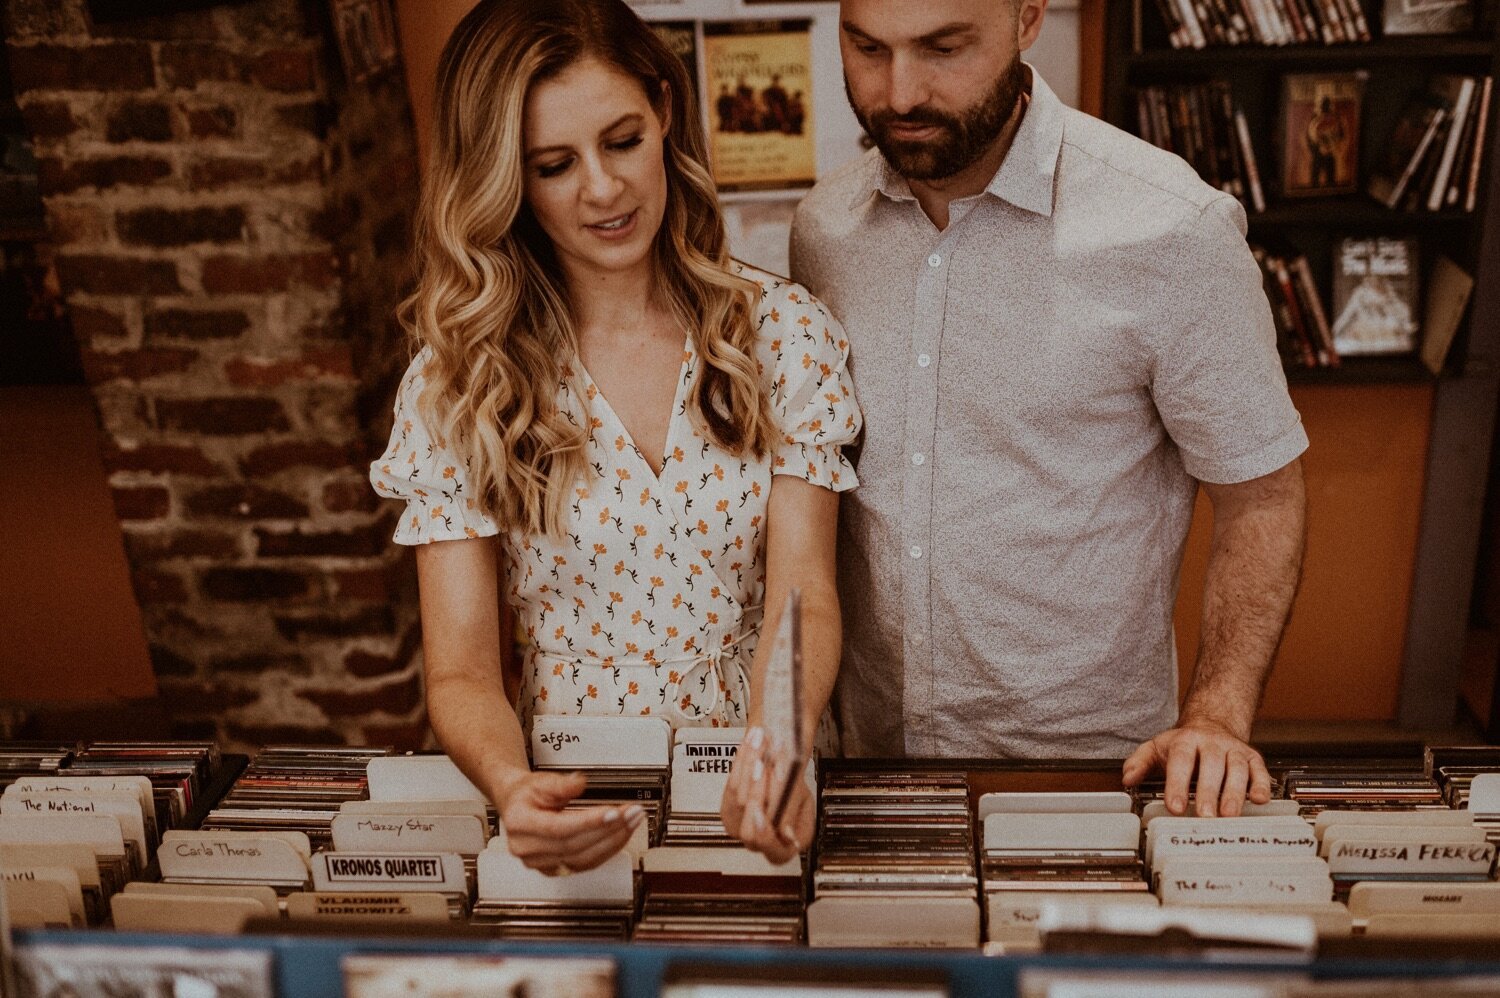 67-montague-ma-romantic-book-vinyl-store-engagement-session-boston-photographer.jpg